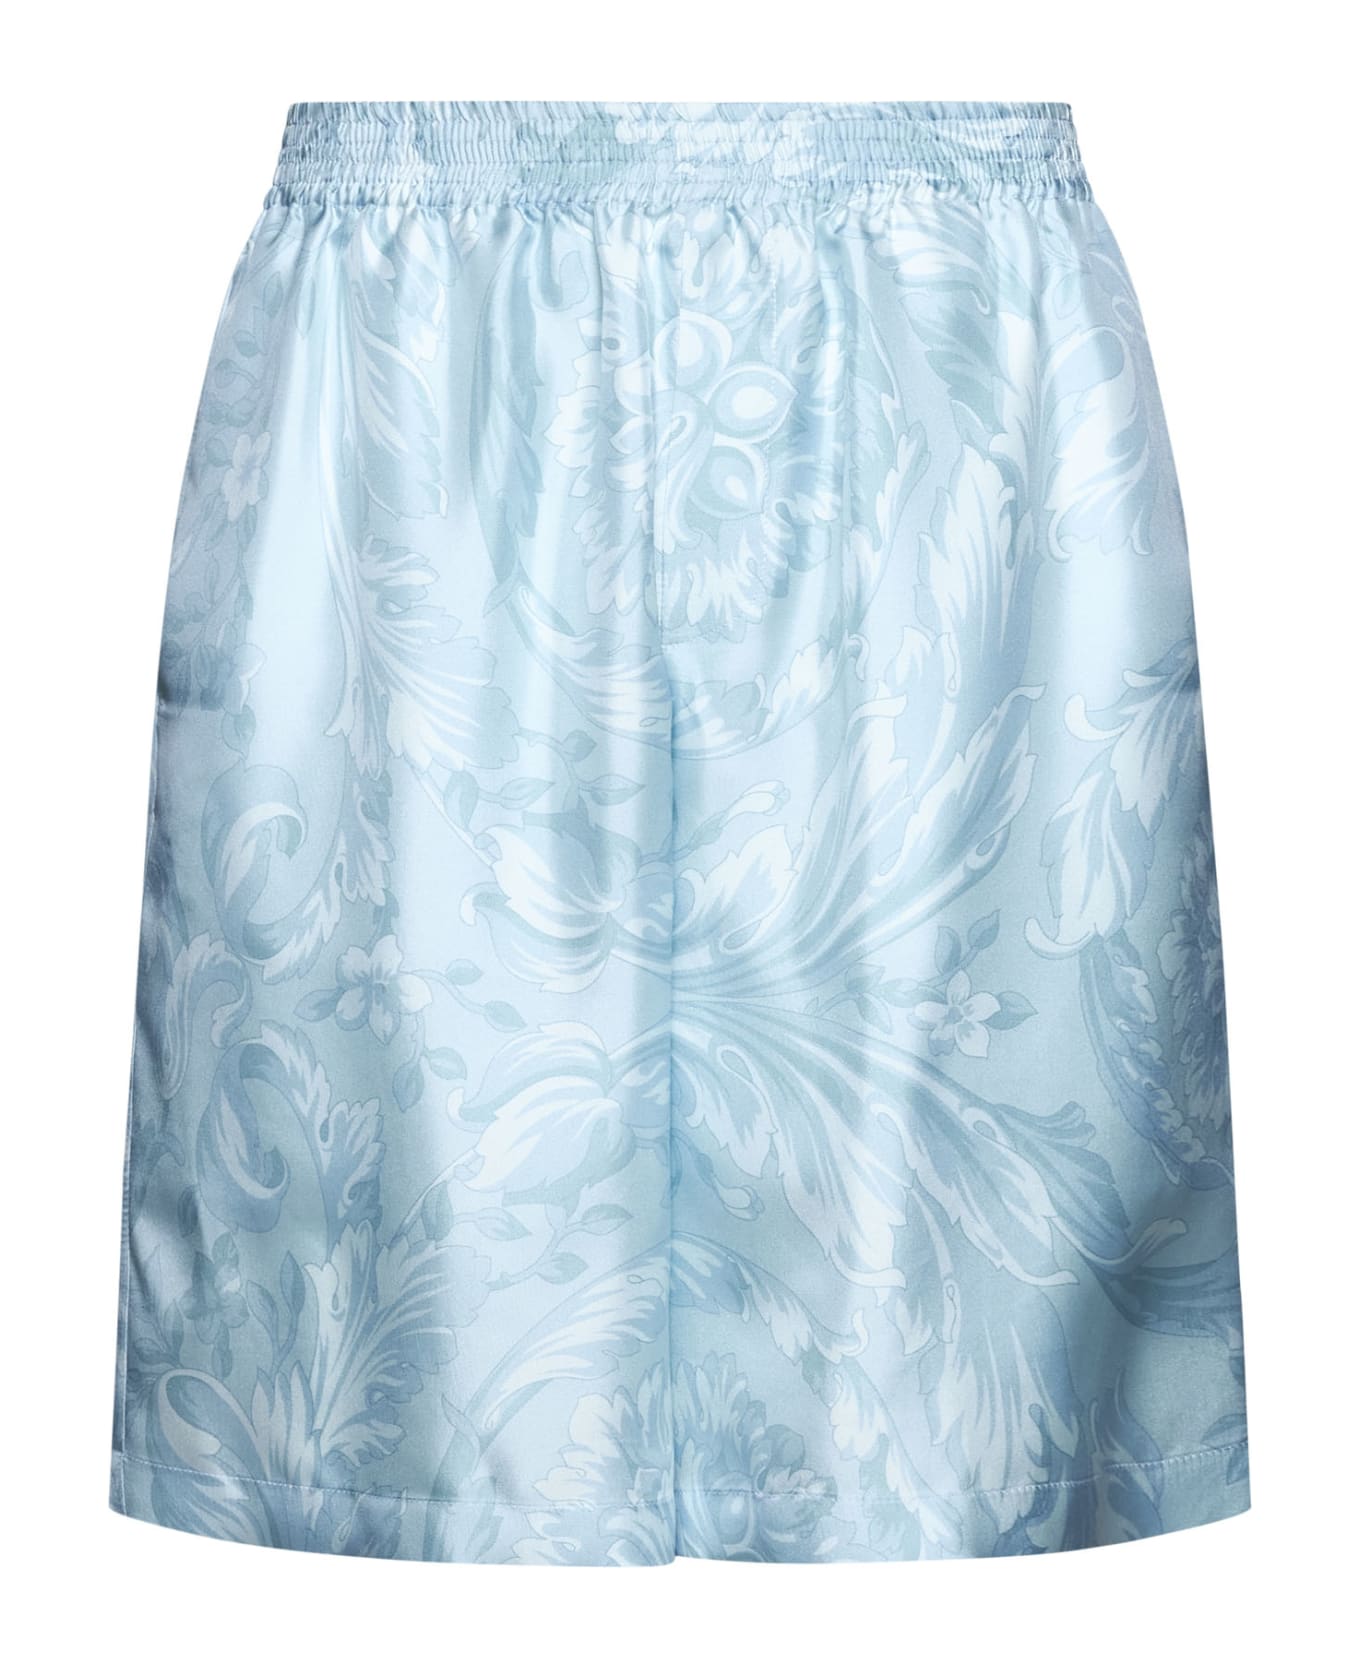 Versace Barocco Shorts - Pale blue ショートパンツ